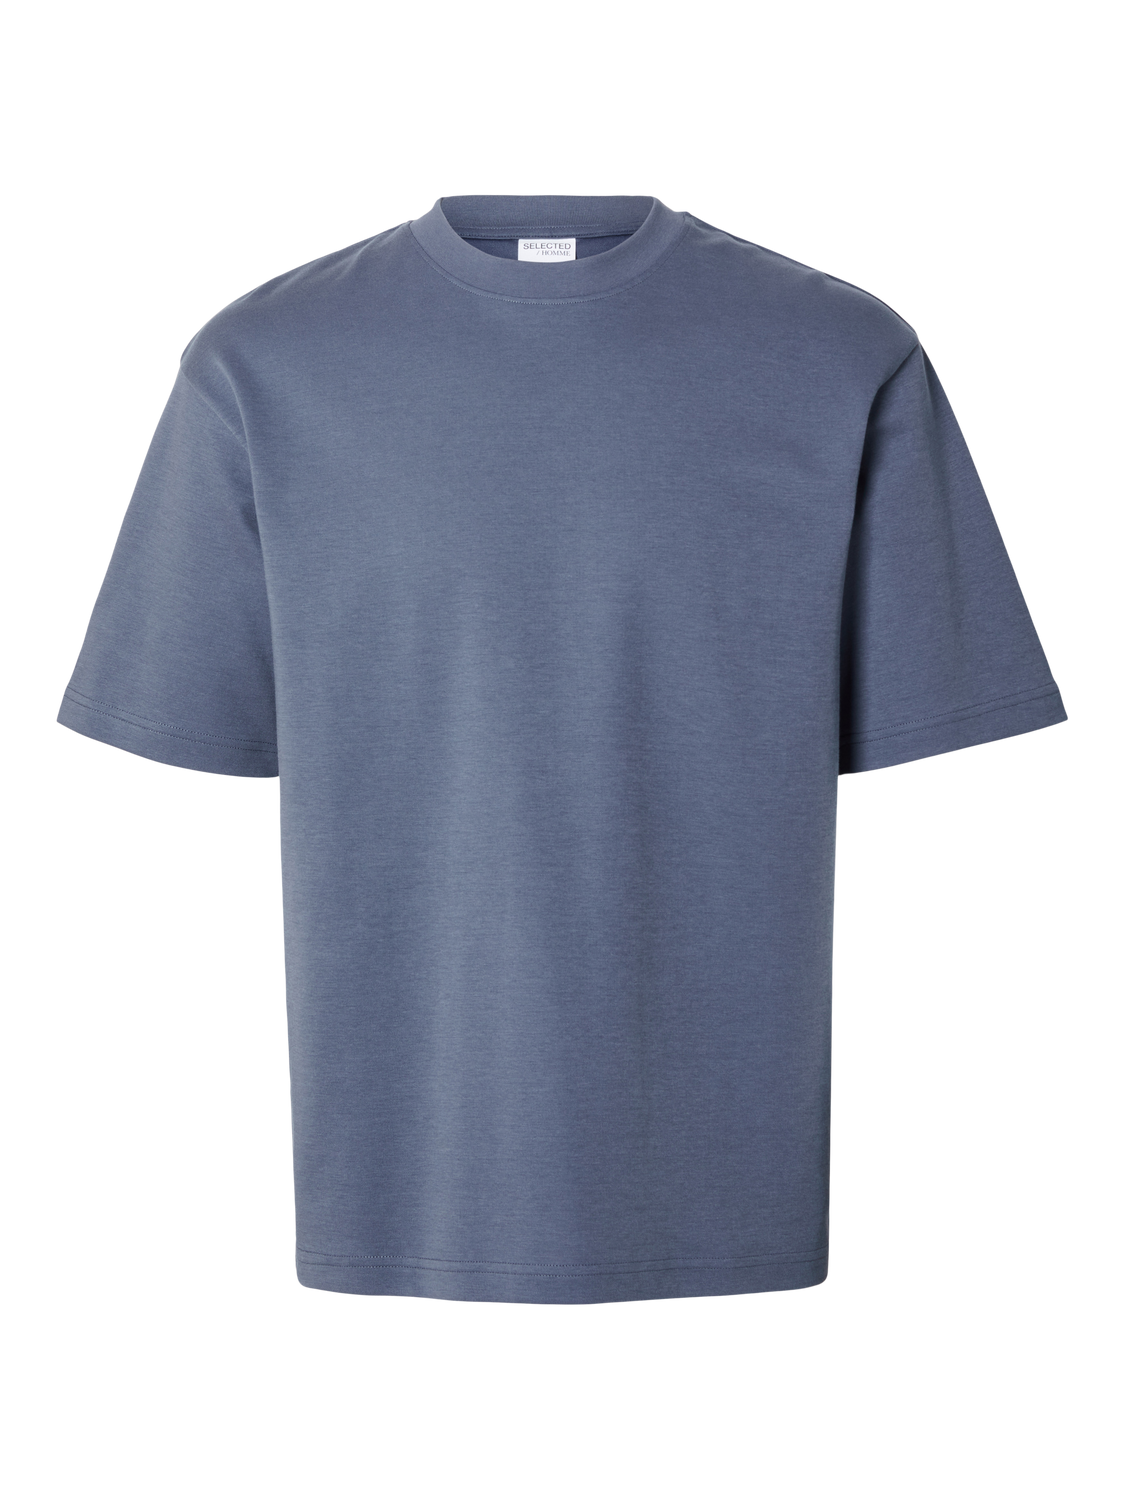 SELECTED HOMME - LOOSE OSCAR T-Shirt - Vintage Indigo